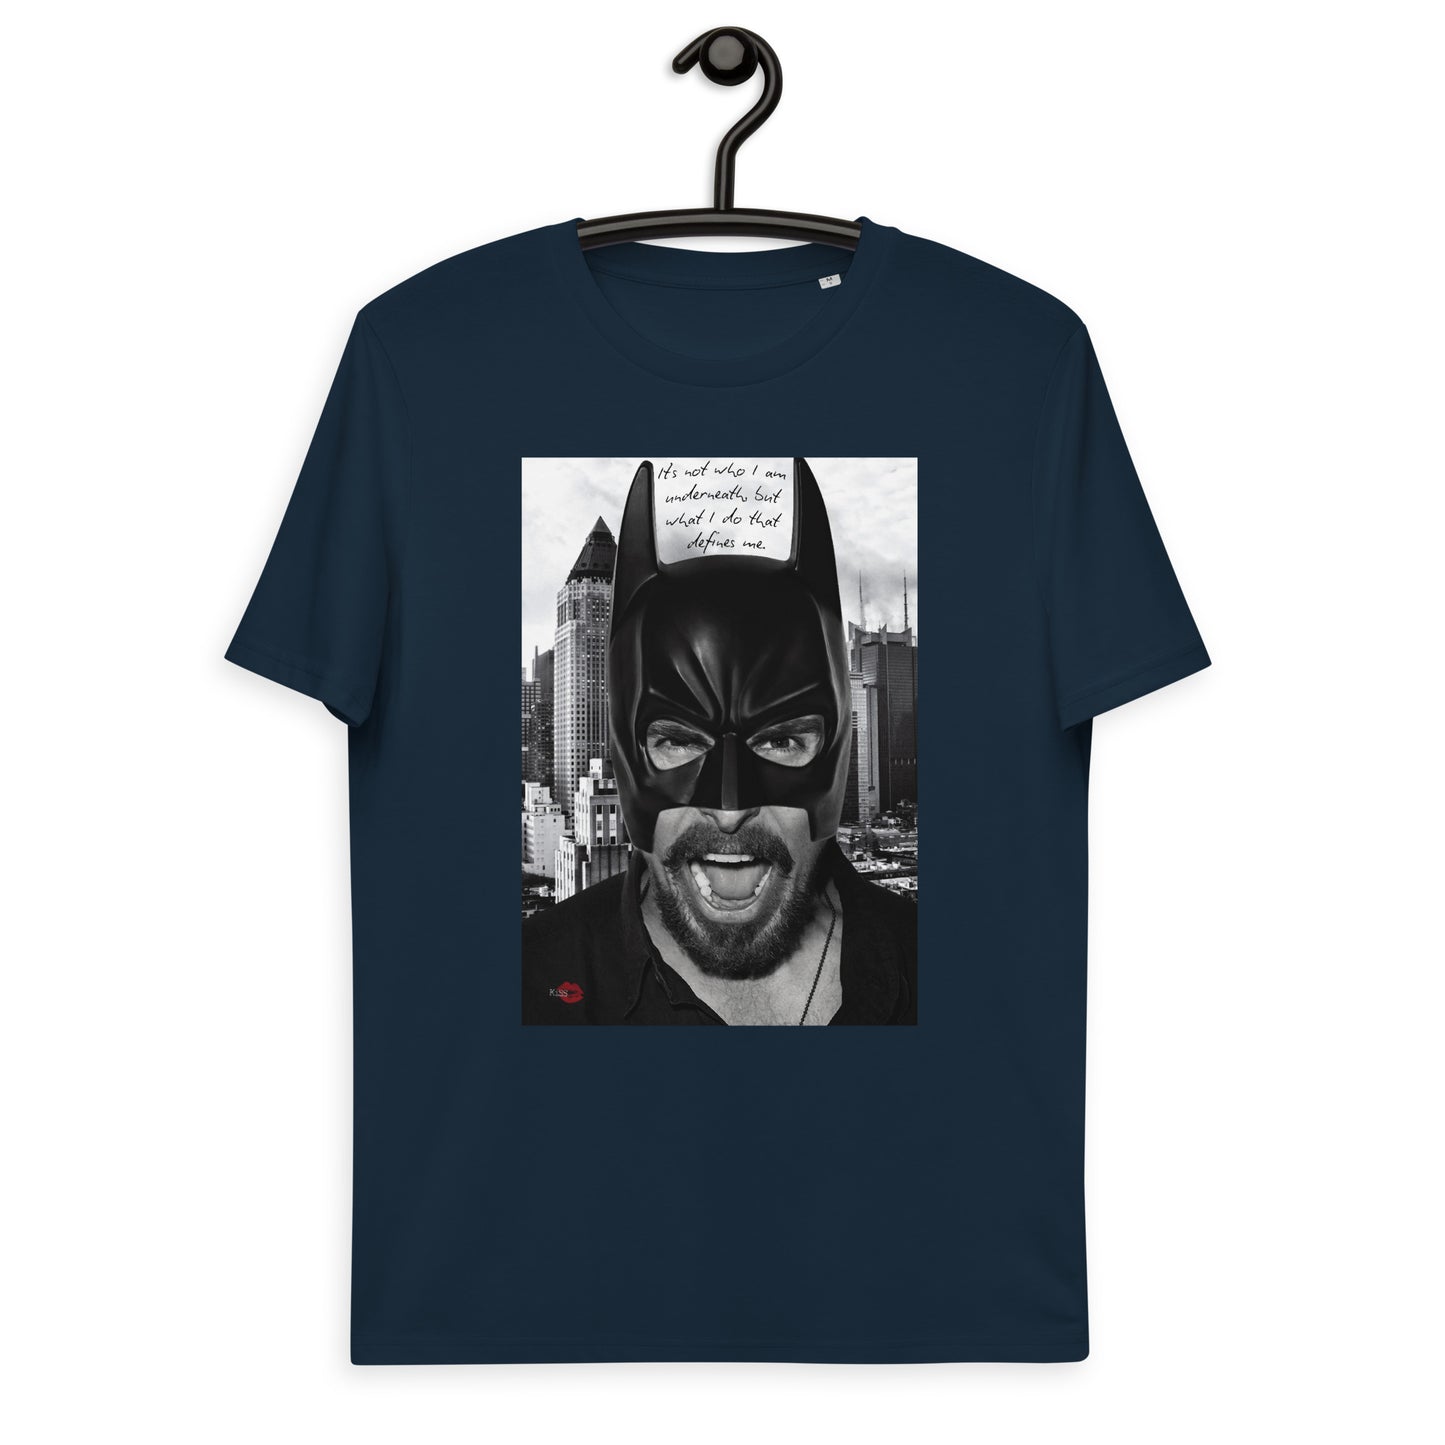 Batman Bale KiSS Unisex organic cotton t-shirt - Movie Quote Christian